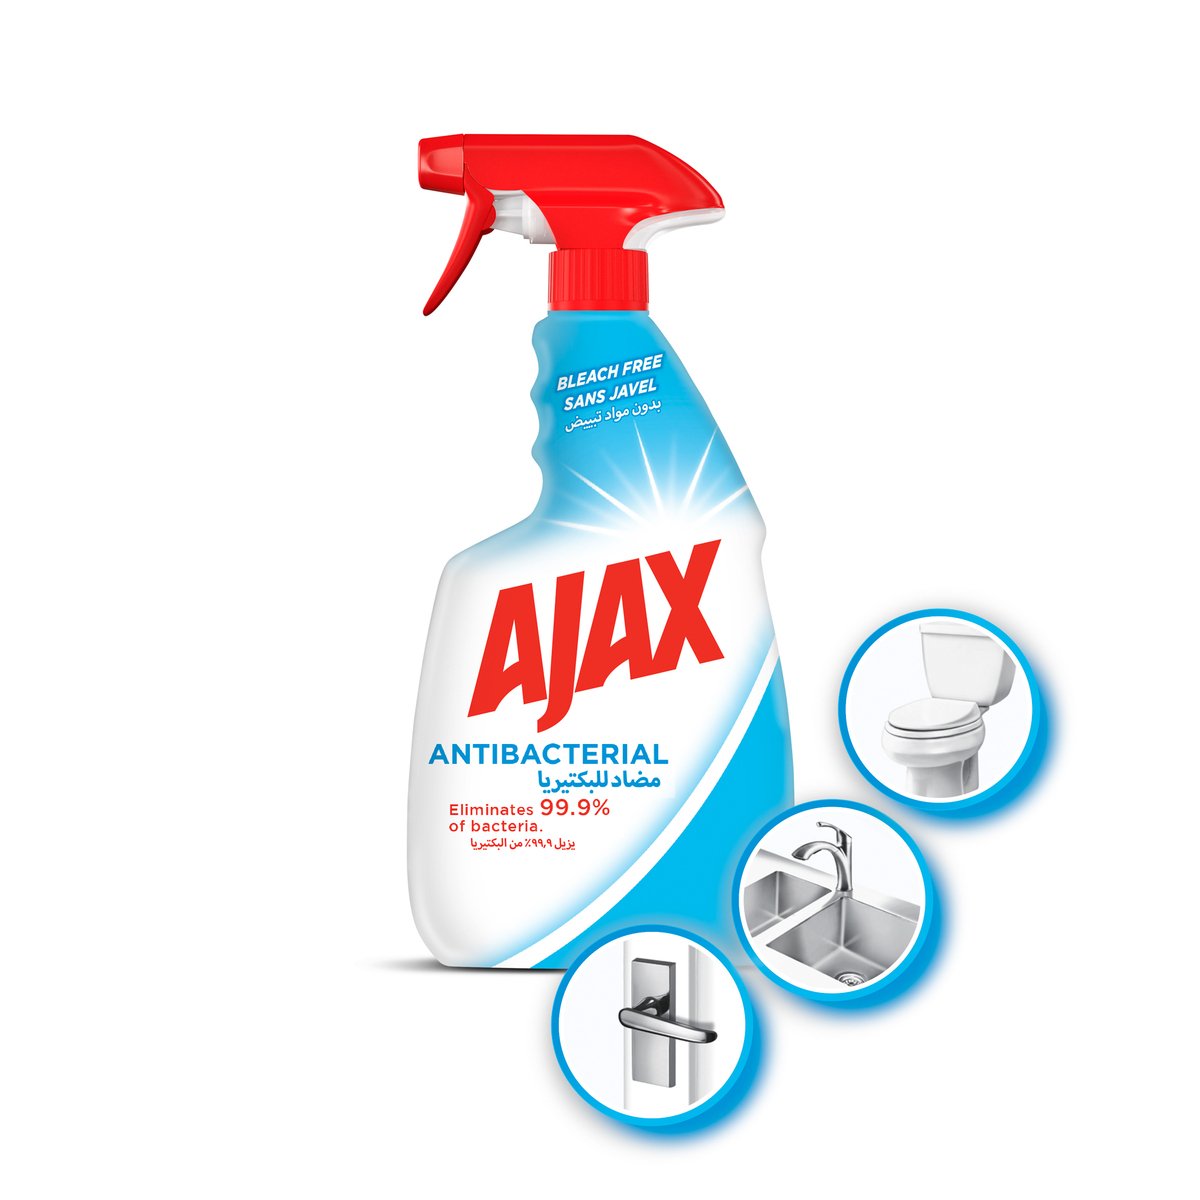 Ajax Antibacterial Multi Surface Cleaner Disinfectant Sanitizer Spray Bleach Free  500ml